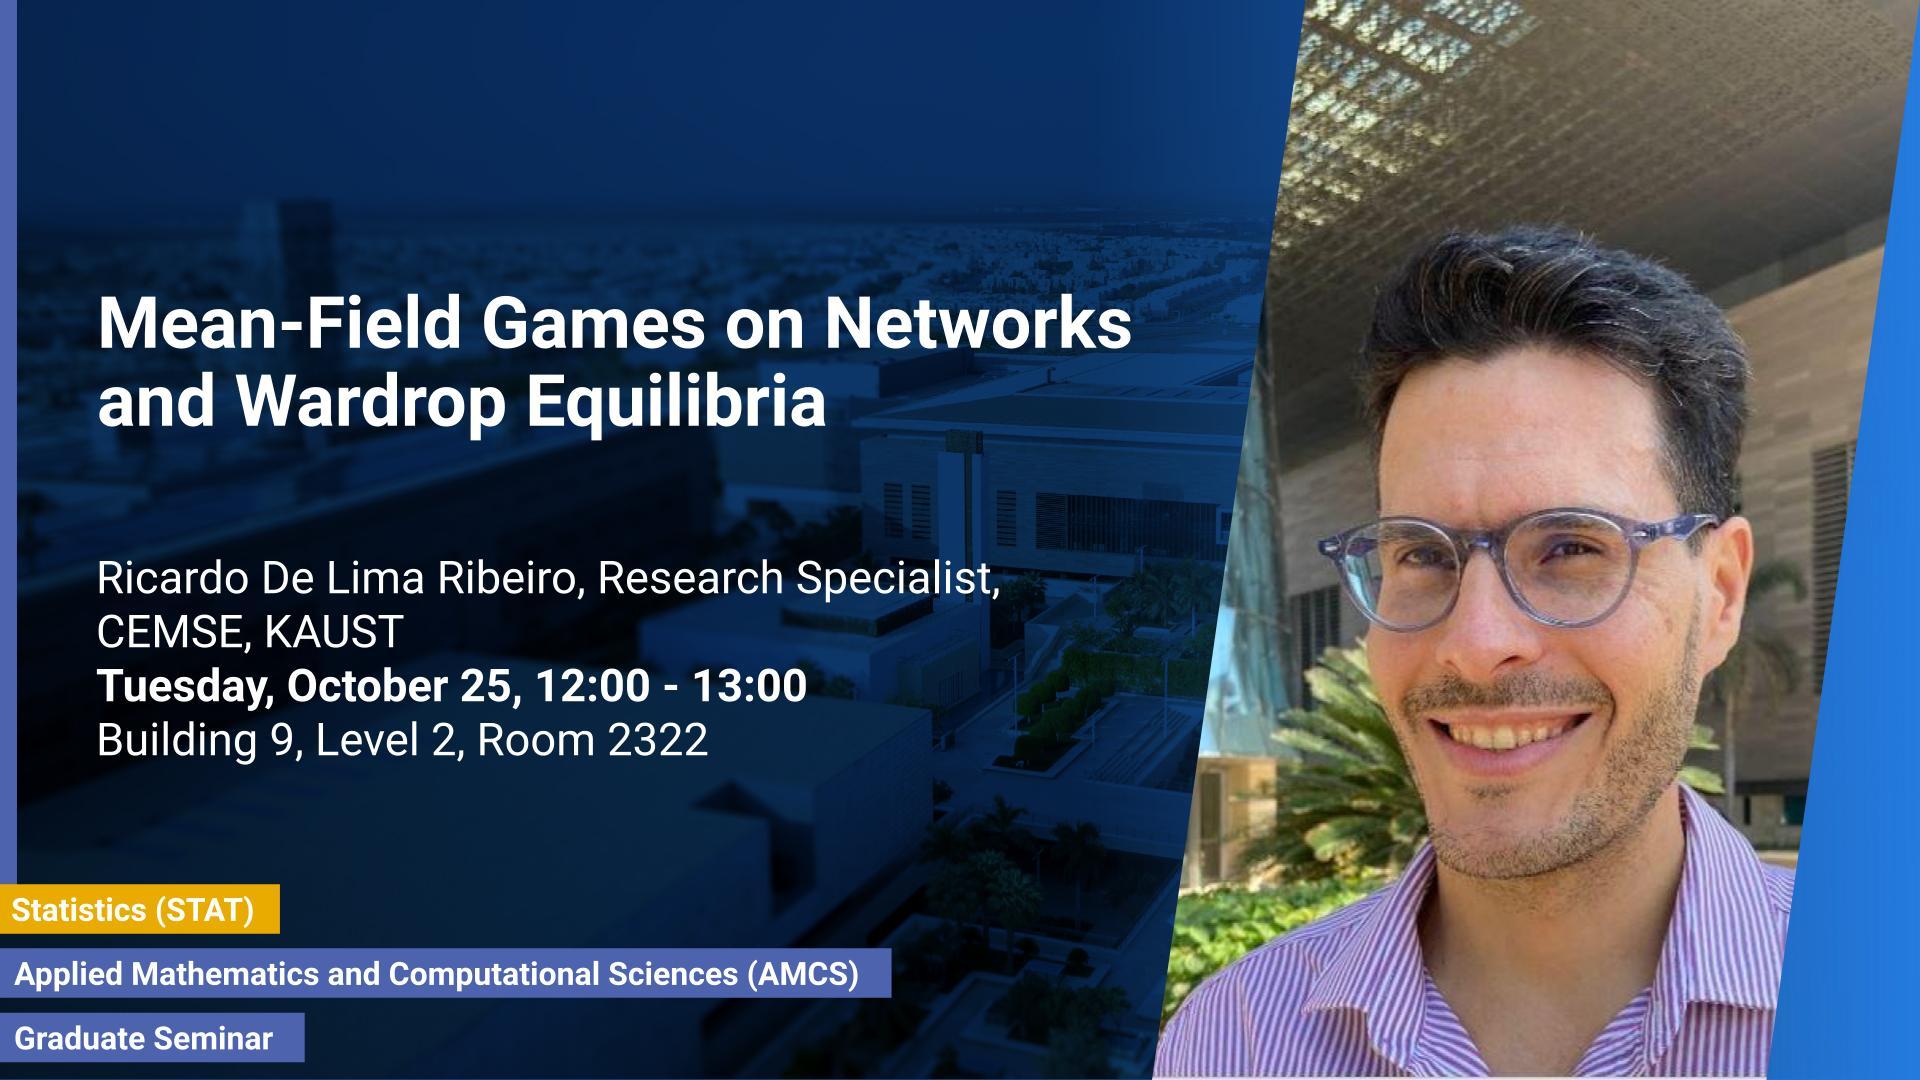 KAUST-CEMSE-STAT-KAUST-CEMSE-AMCS- Graduate Seminar-Ricardo-De Lima Ribeiro-Mean-Field Games-Networks-Wardrop Equilibria